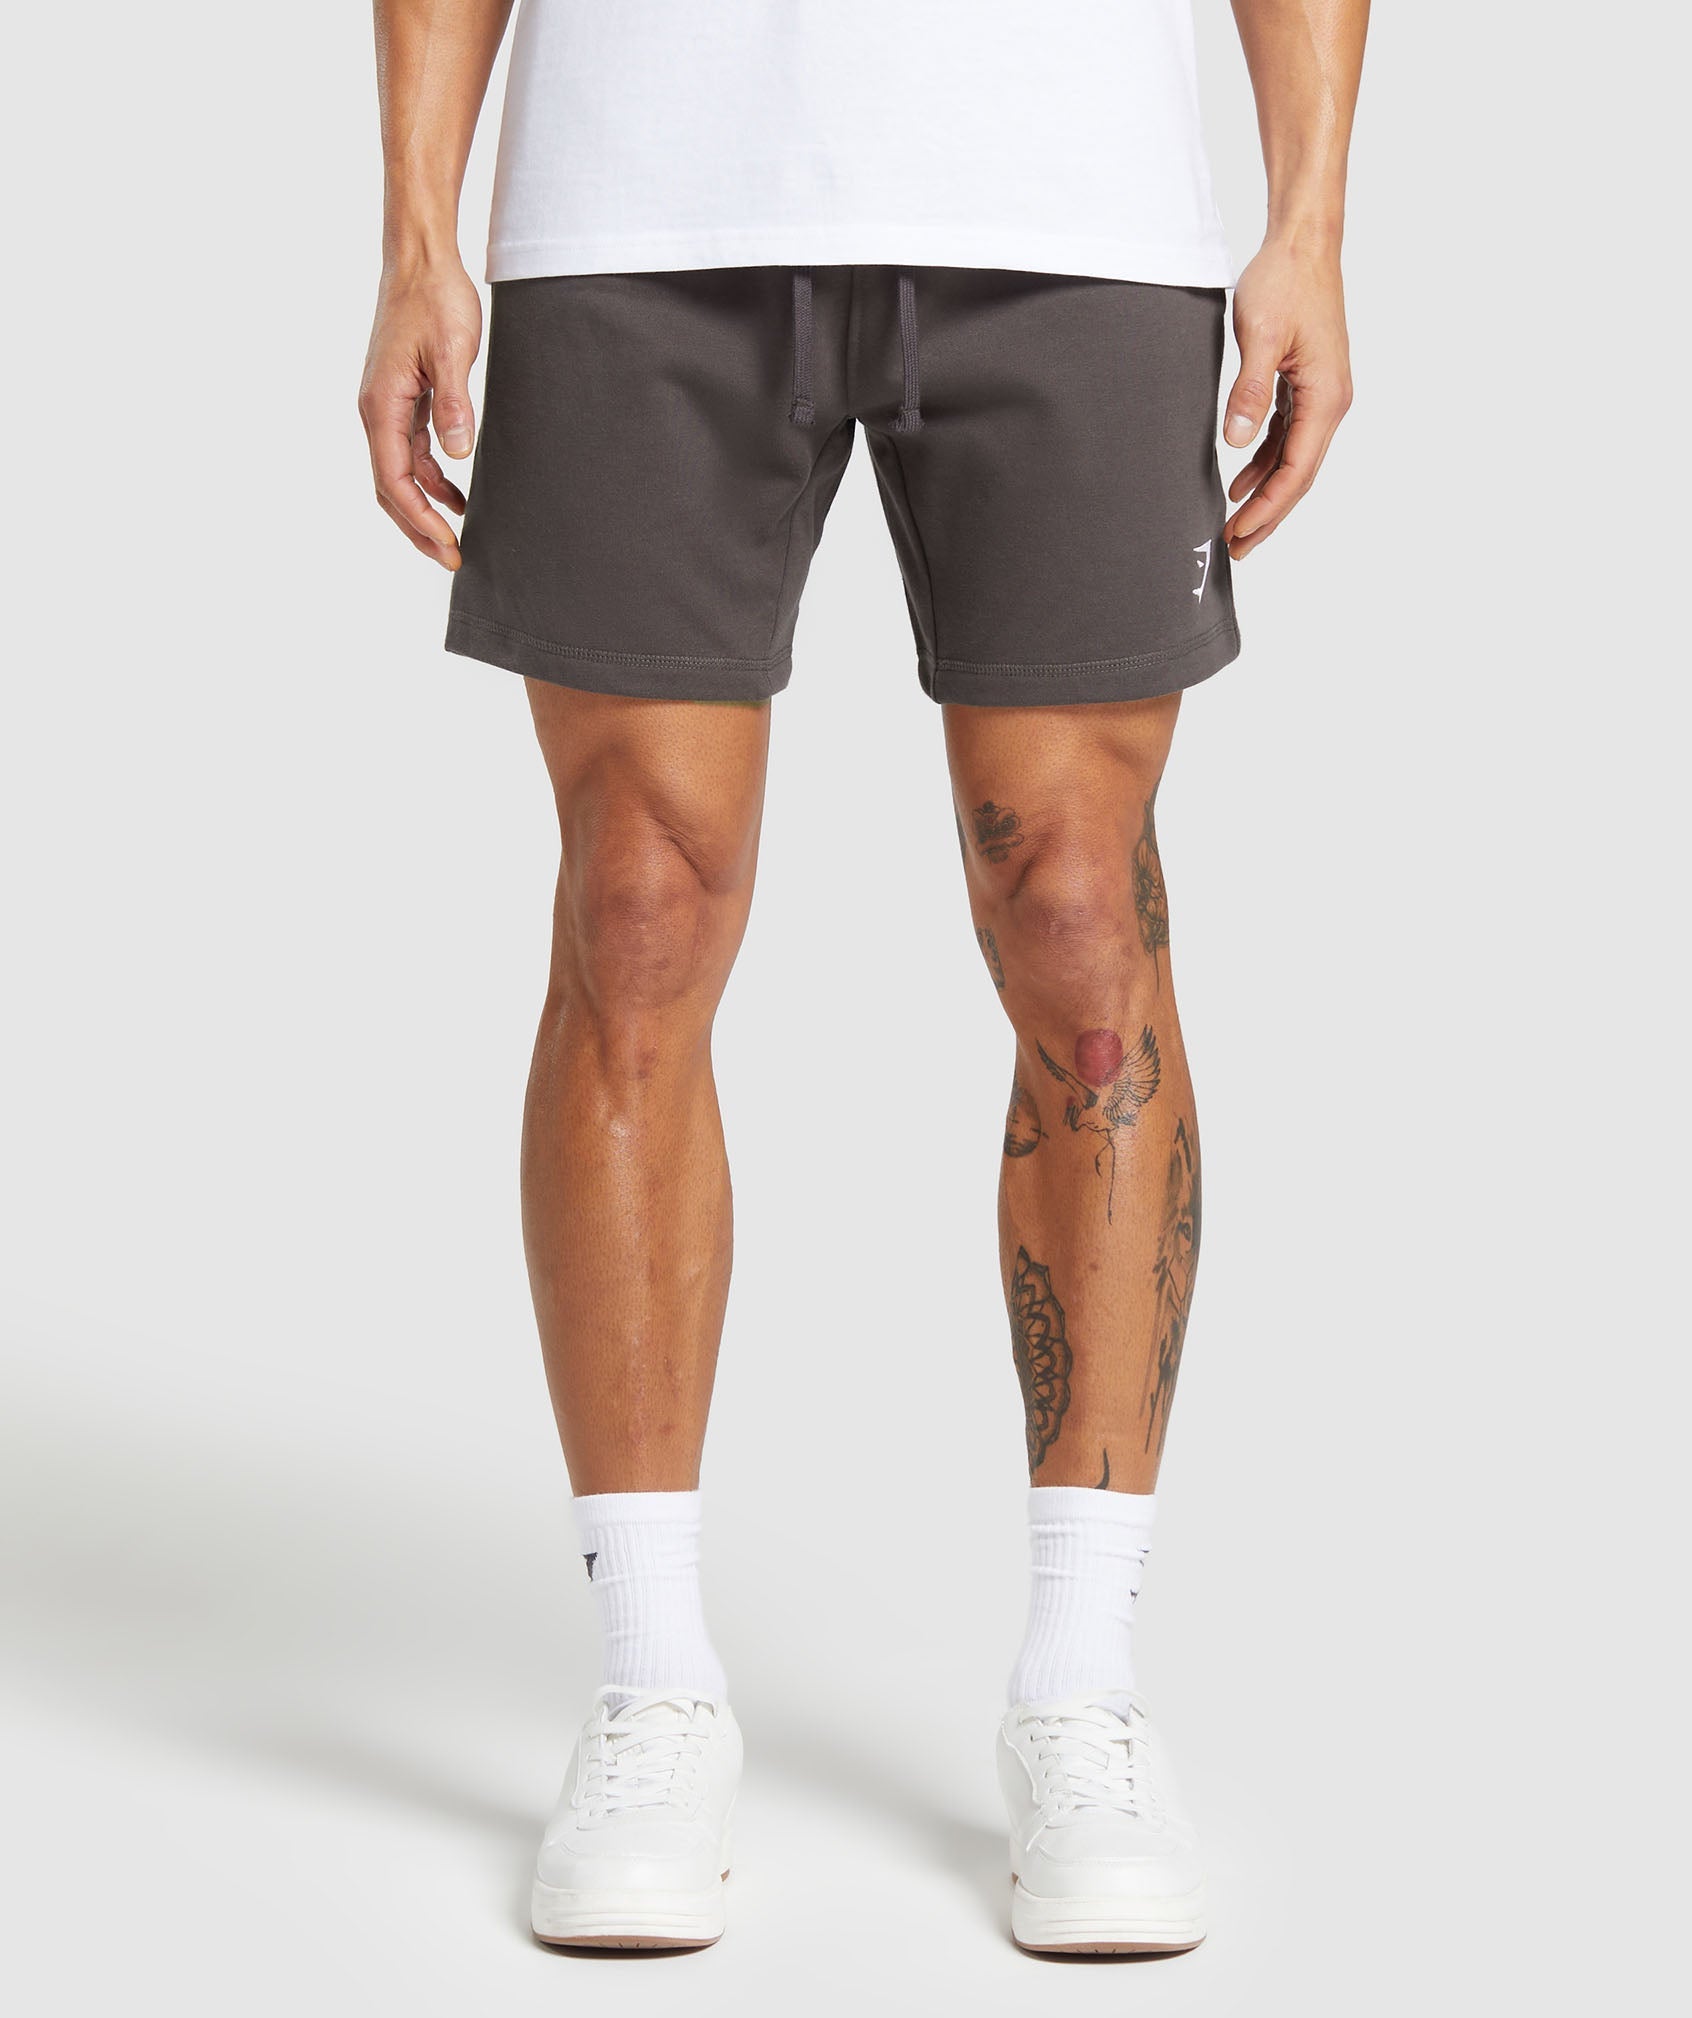 Gymshark Crest 7 Shorts - Stone Grey